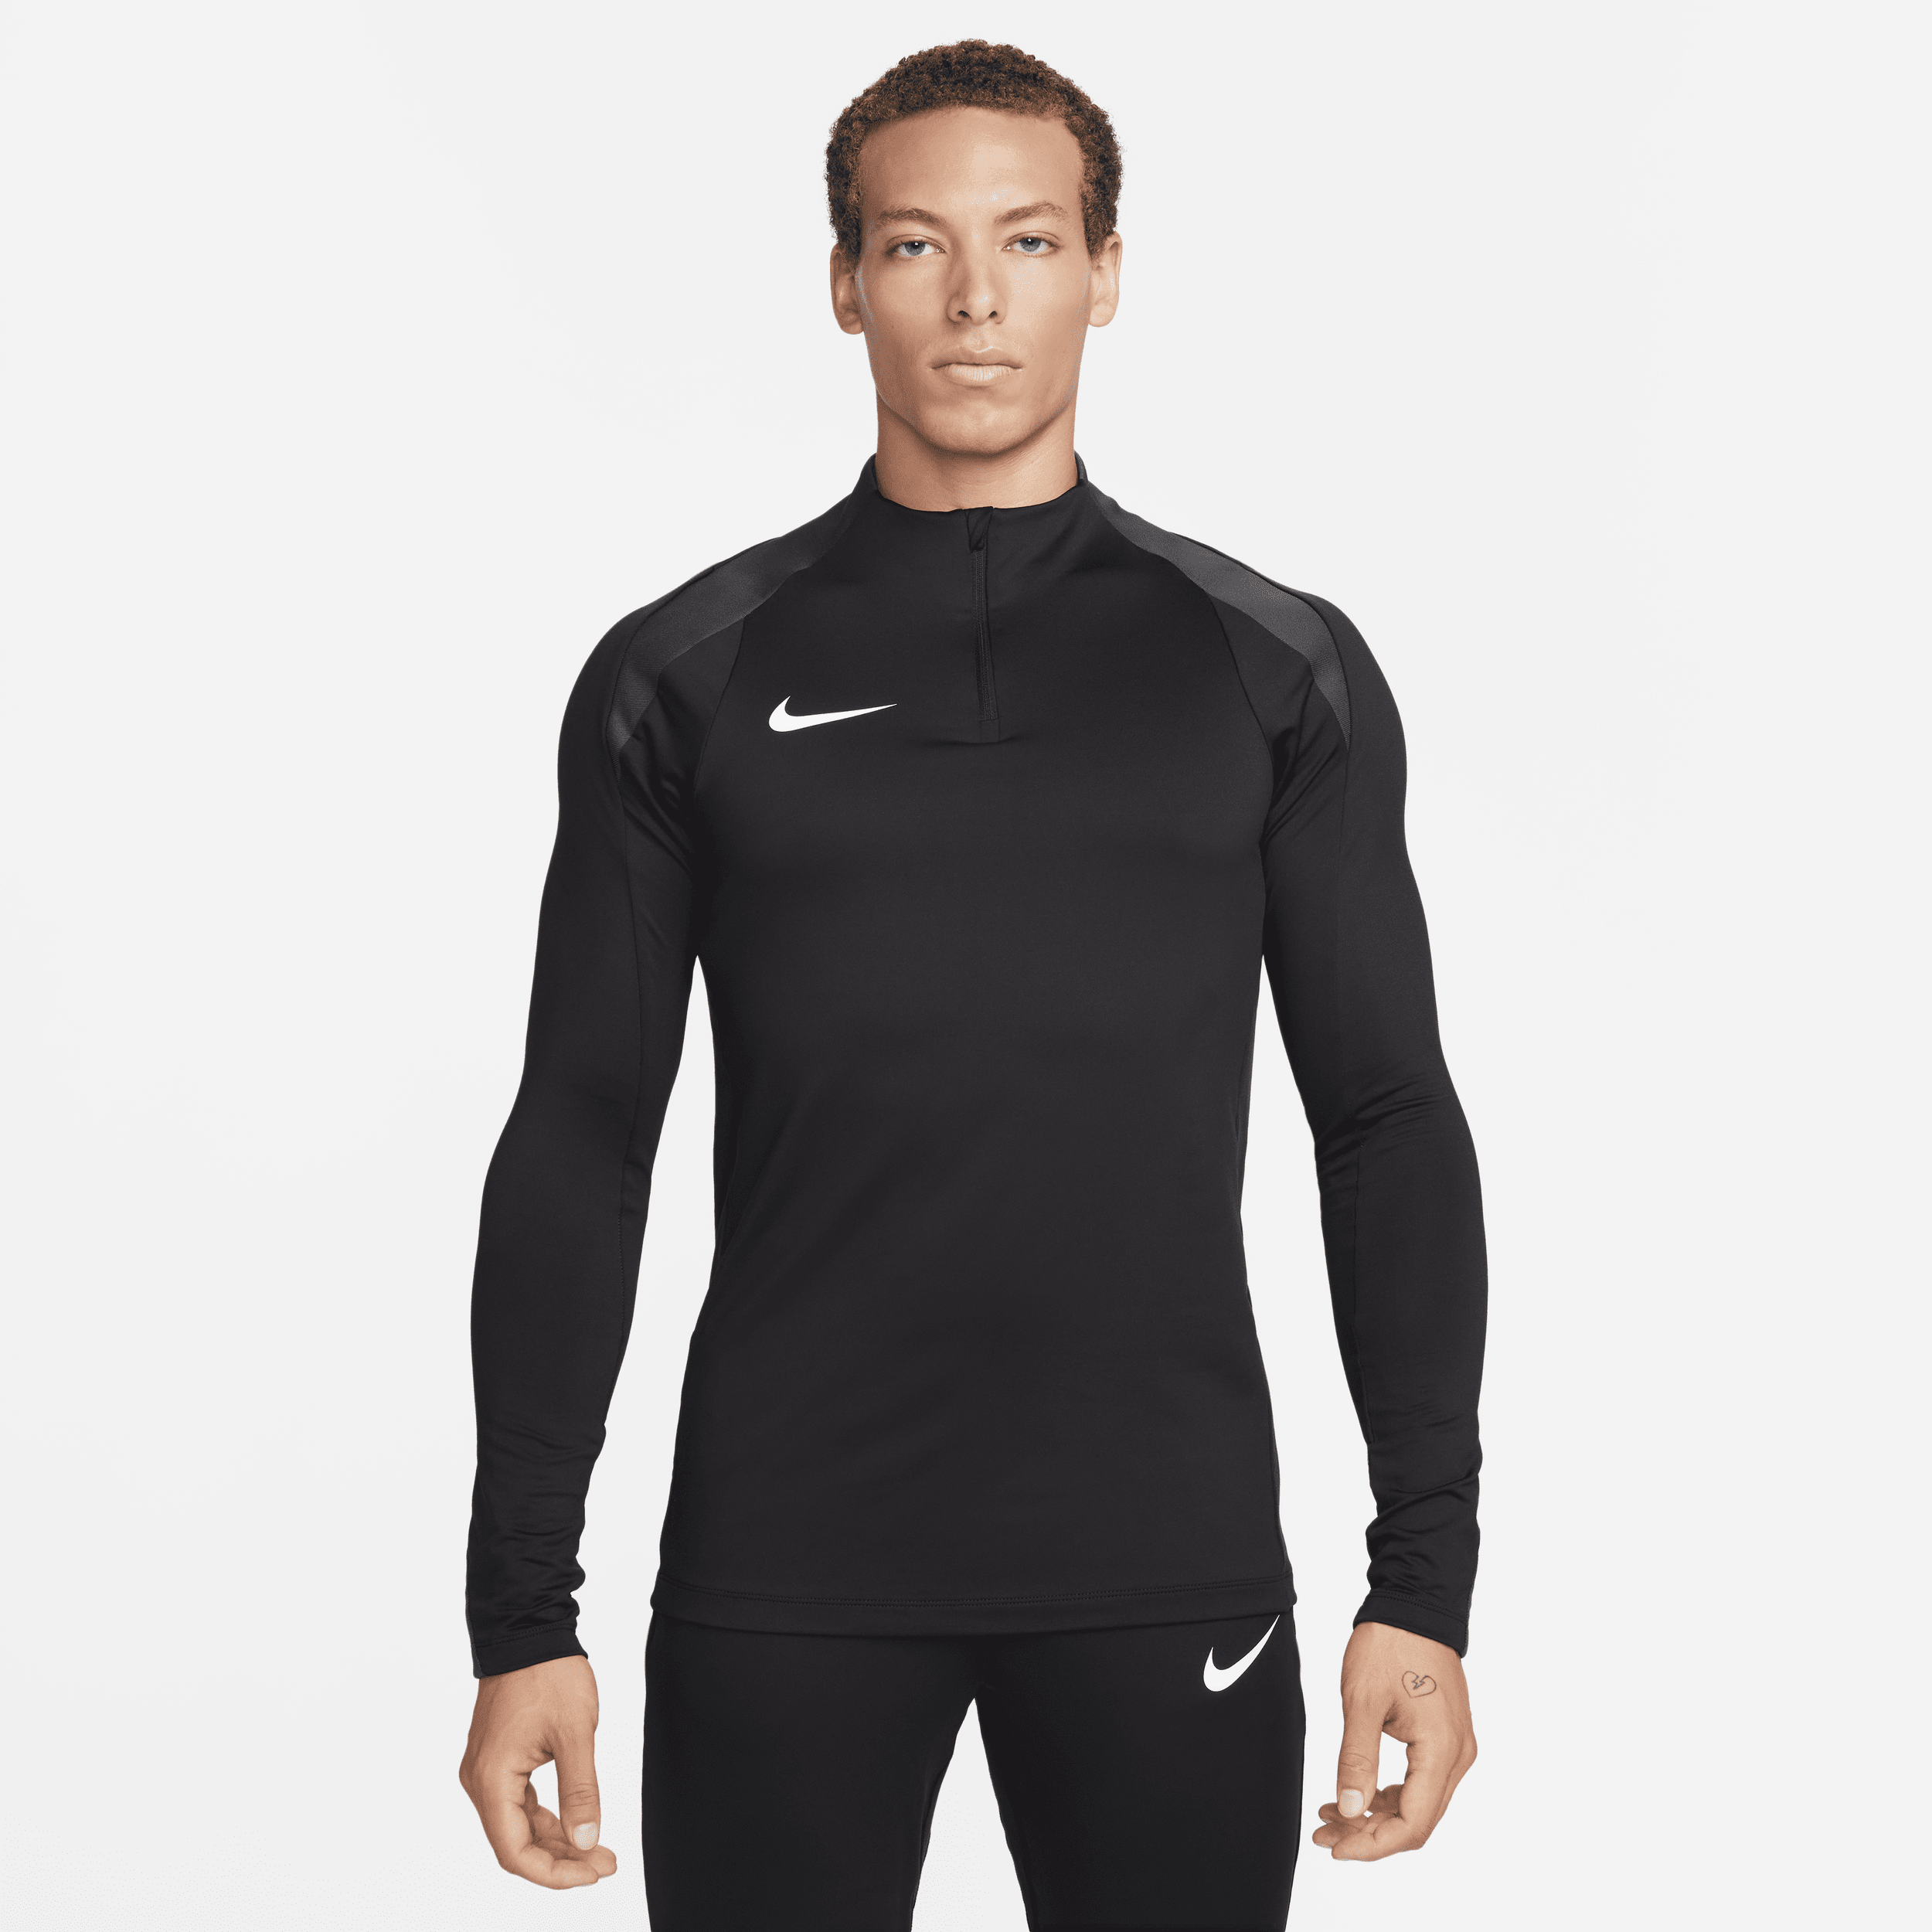 Nike Strike Dri-FIT voetbaltrainingstop met halflange rits voor heren - Zwart